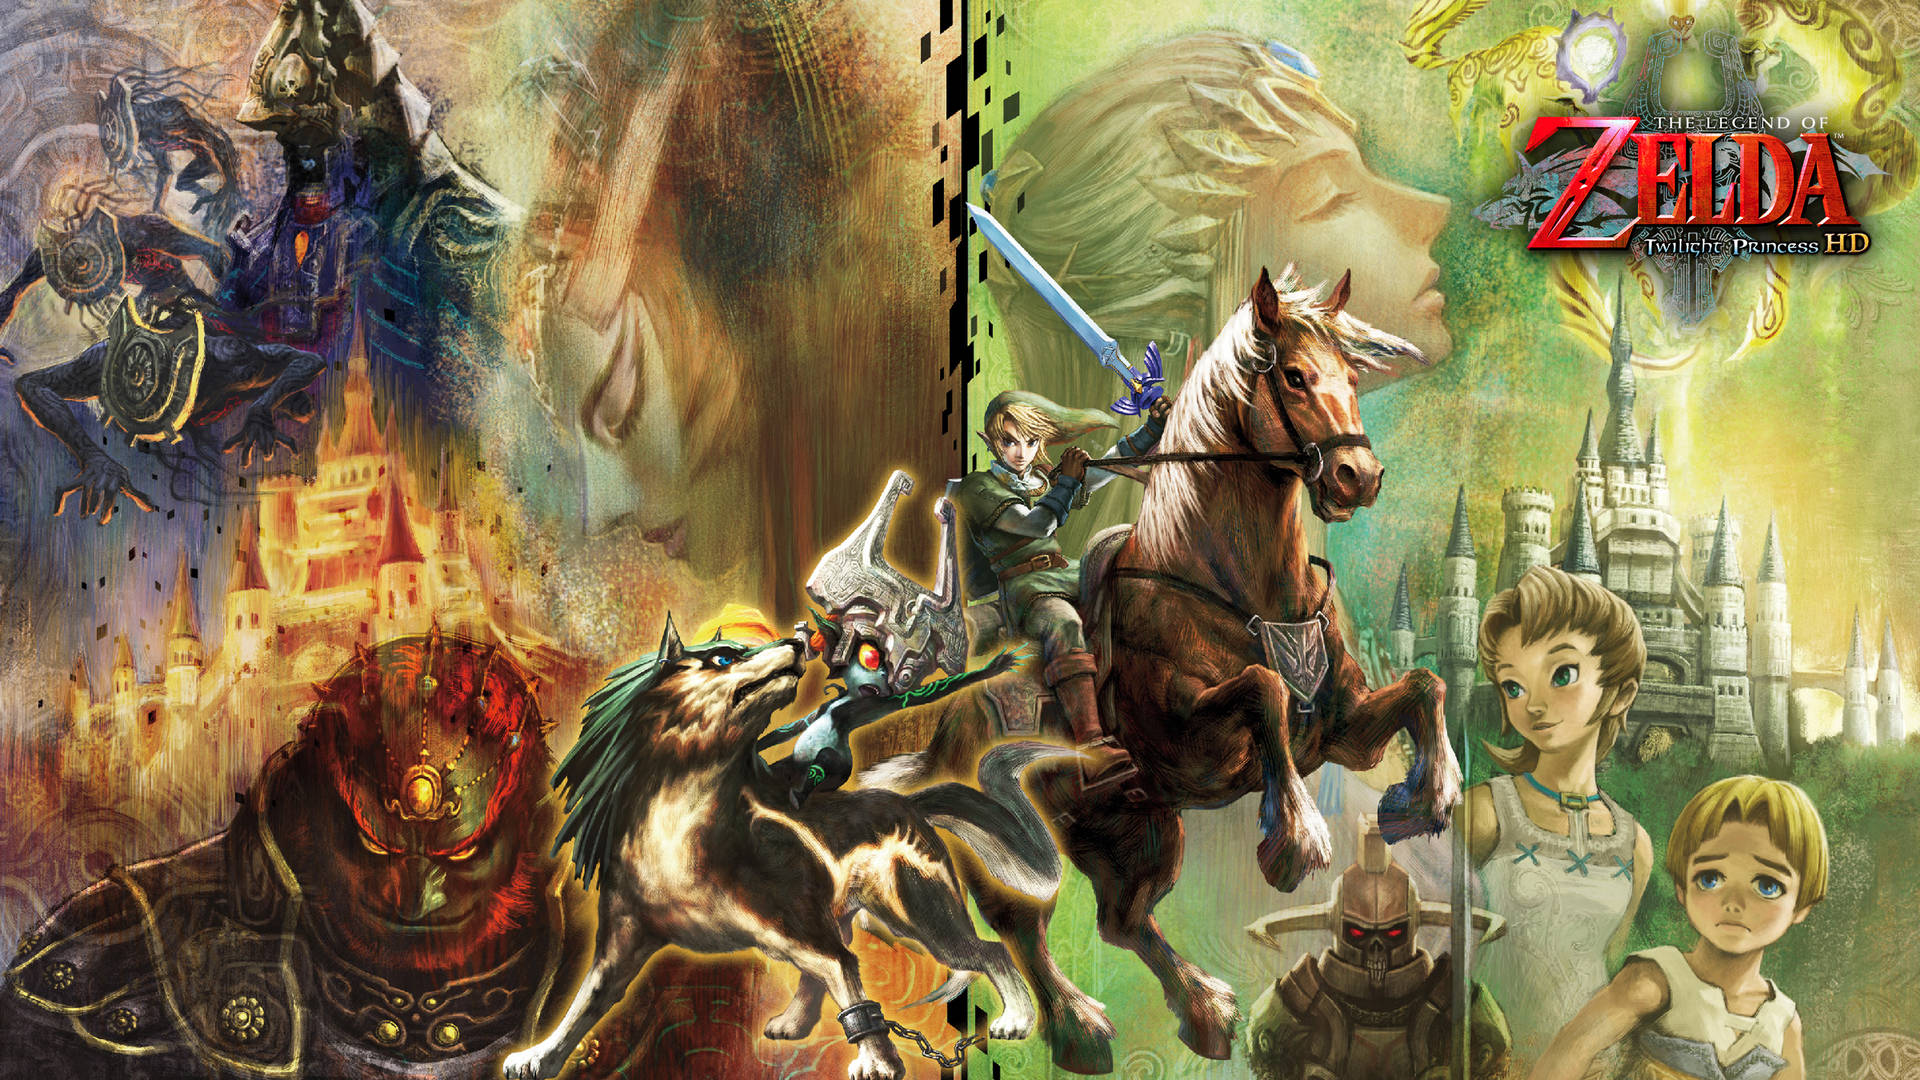 The Legend Of Zelda - Twilight Princess Wallpaper Background